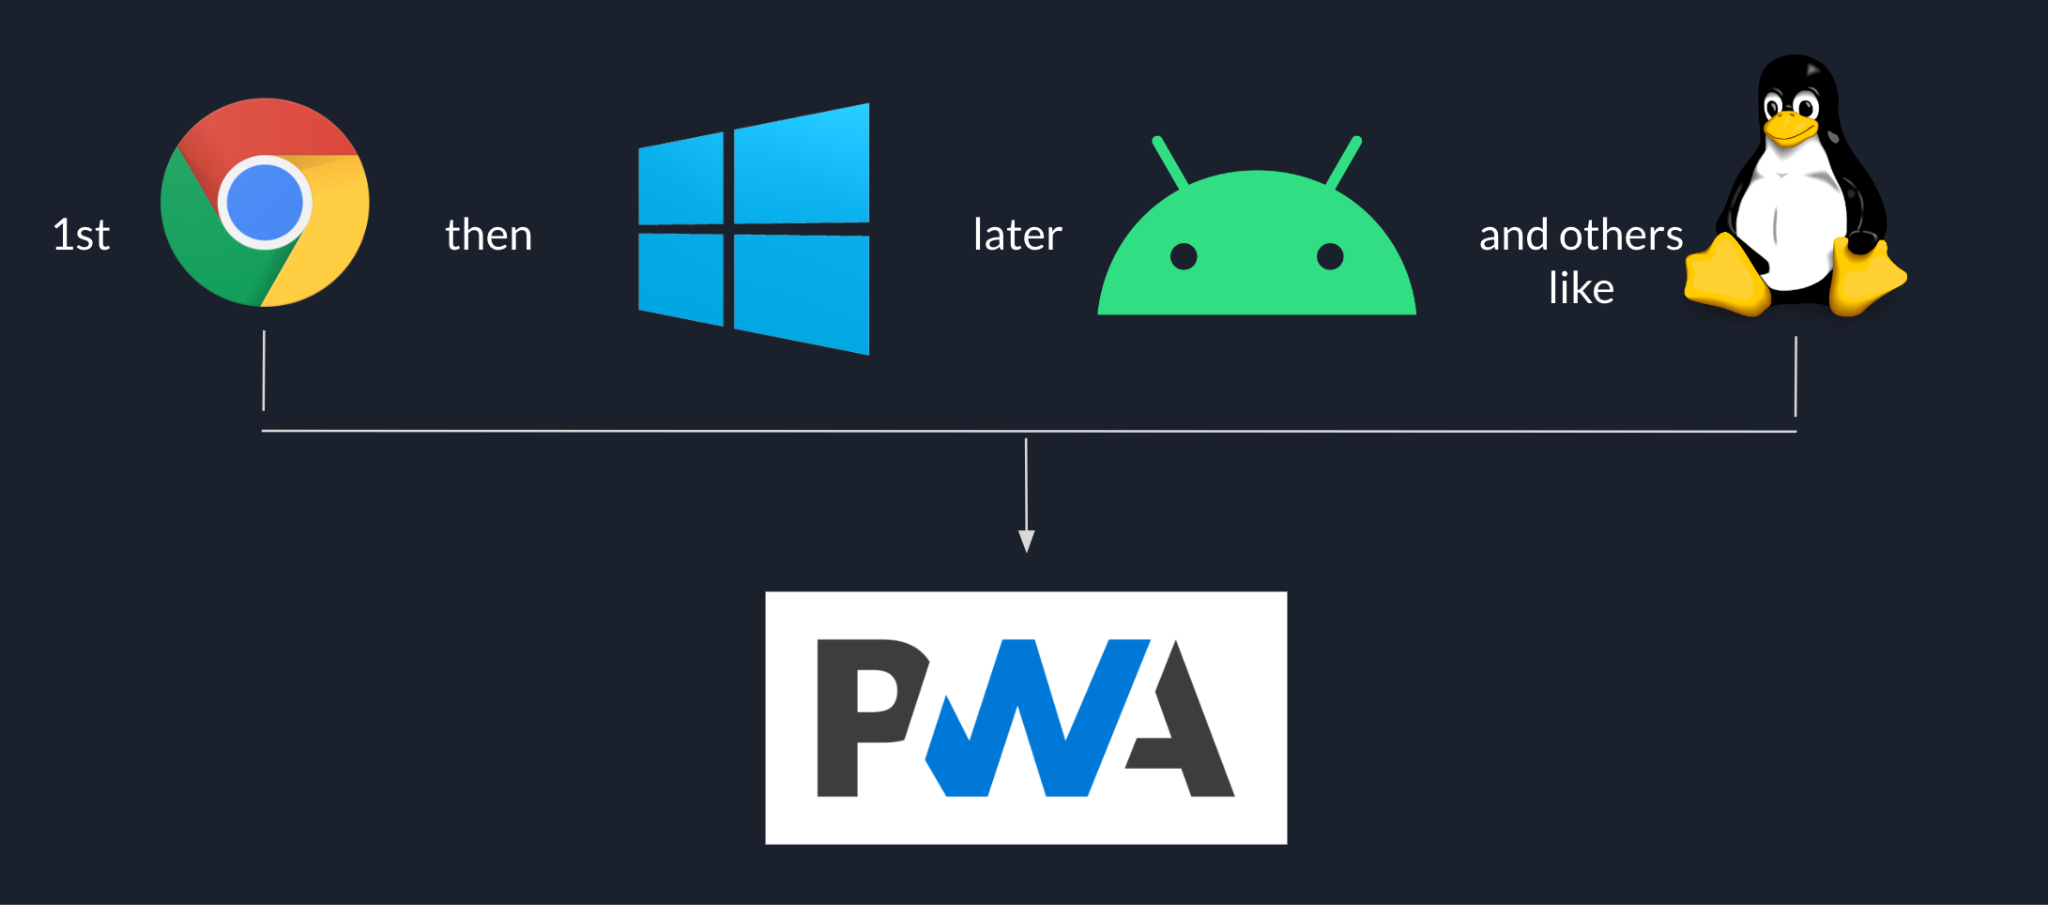 Goodnotes 的发布顺序是从 Chrome 开始，接着是 Windows，最后是 Android 以及 Linux 等其他平台，最后这些平台都是基于 PWA 的。